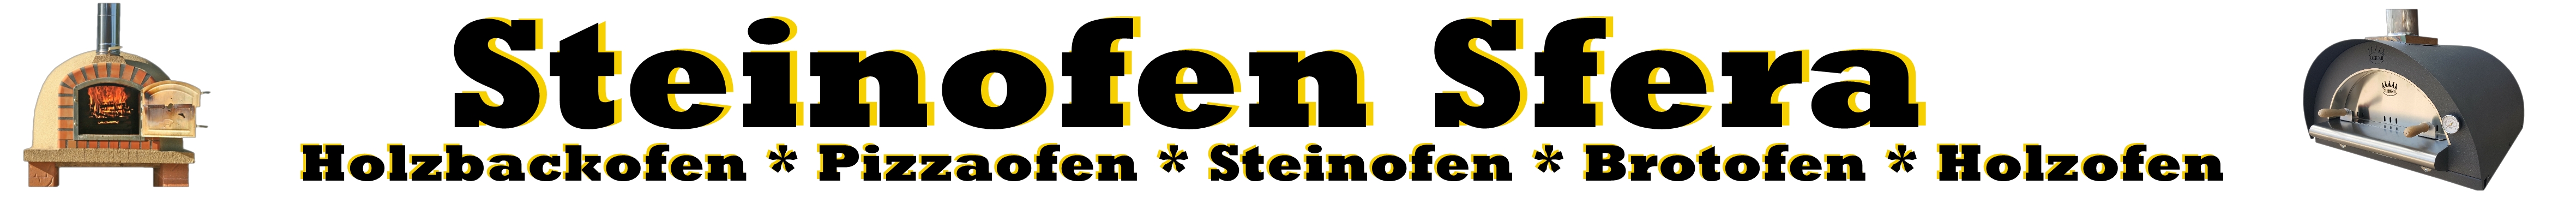 Steinofen Sfera Logo